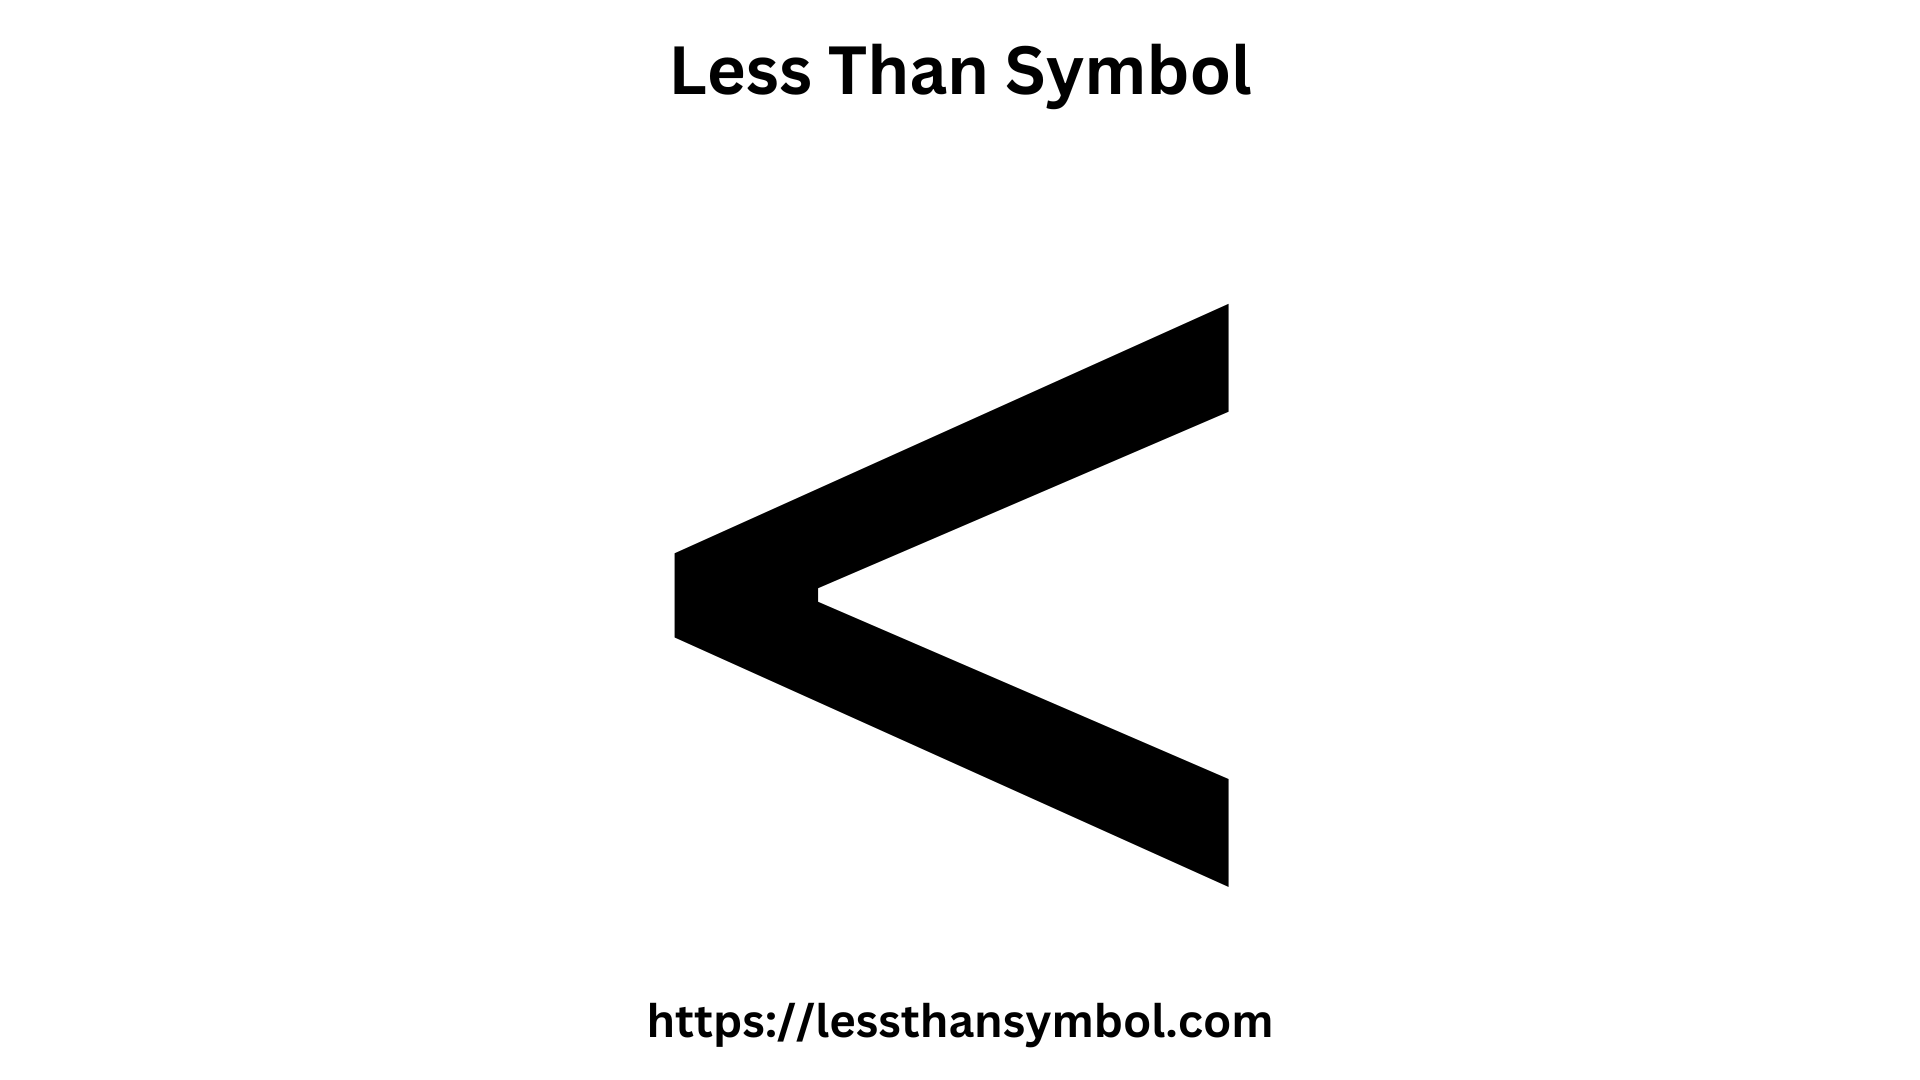 (c) Lessthansymbol.com